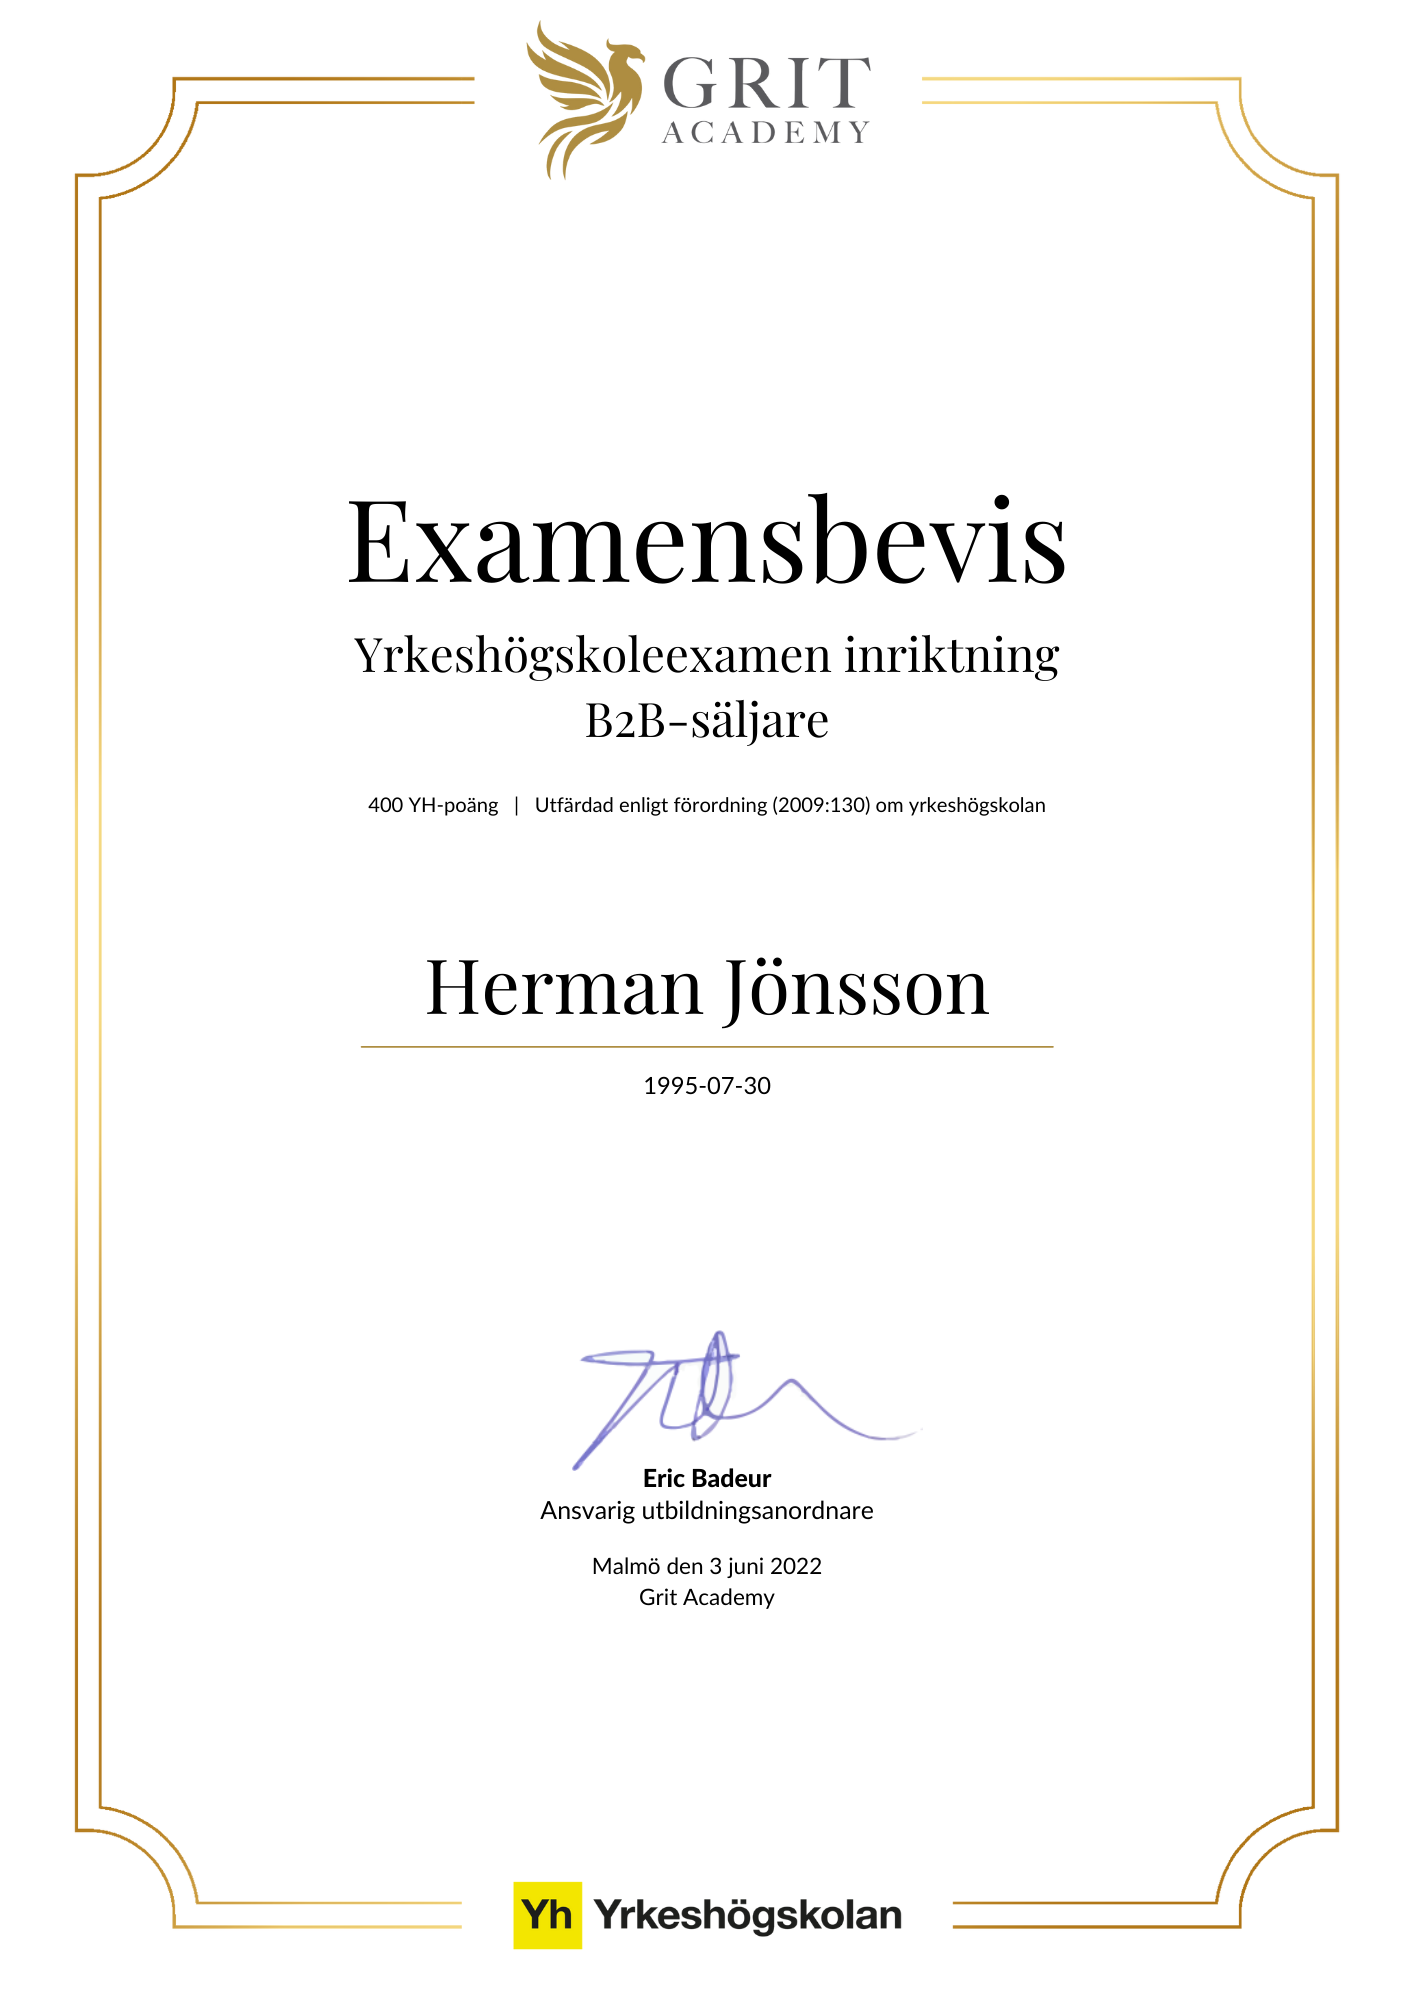 Examensbevis Herman Jönsson